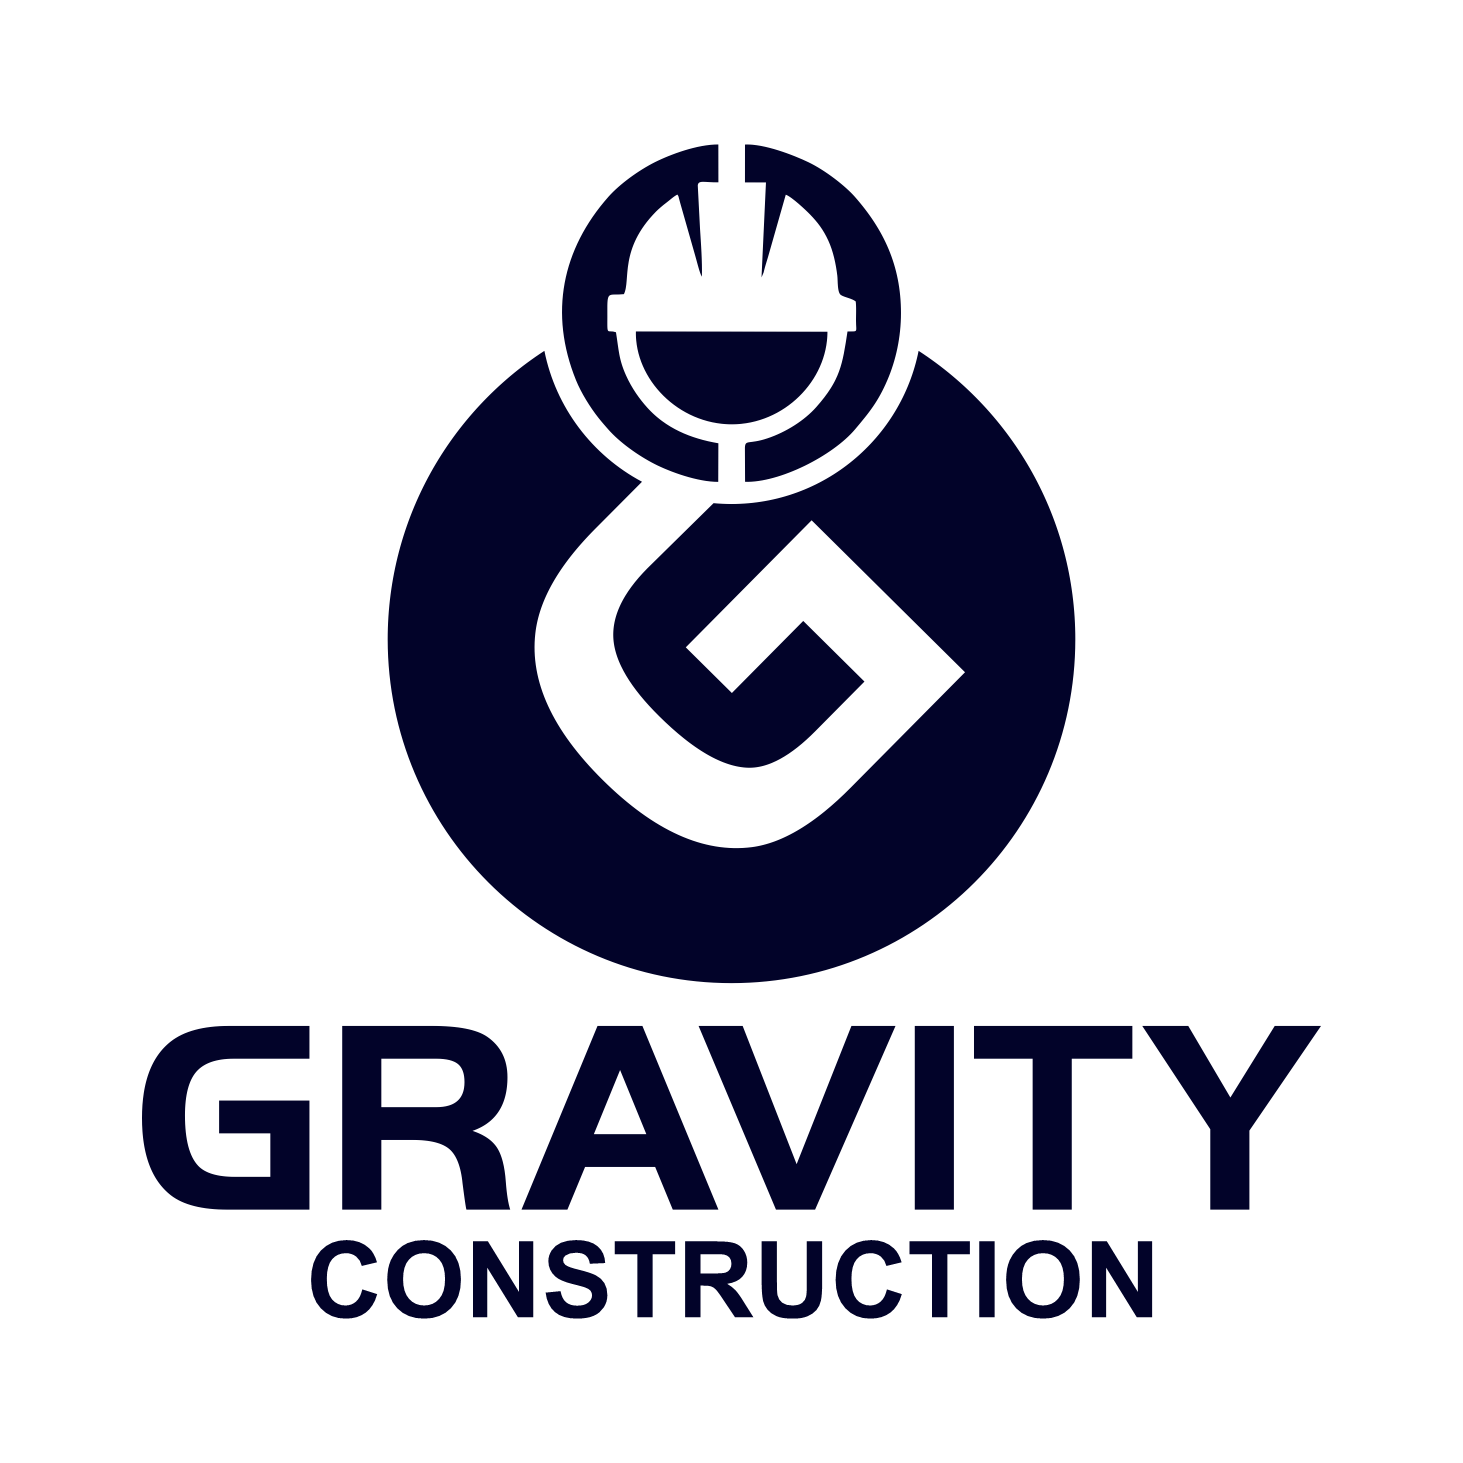 Gravity Construction